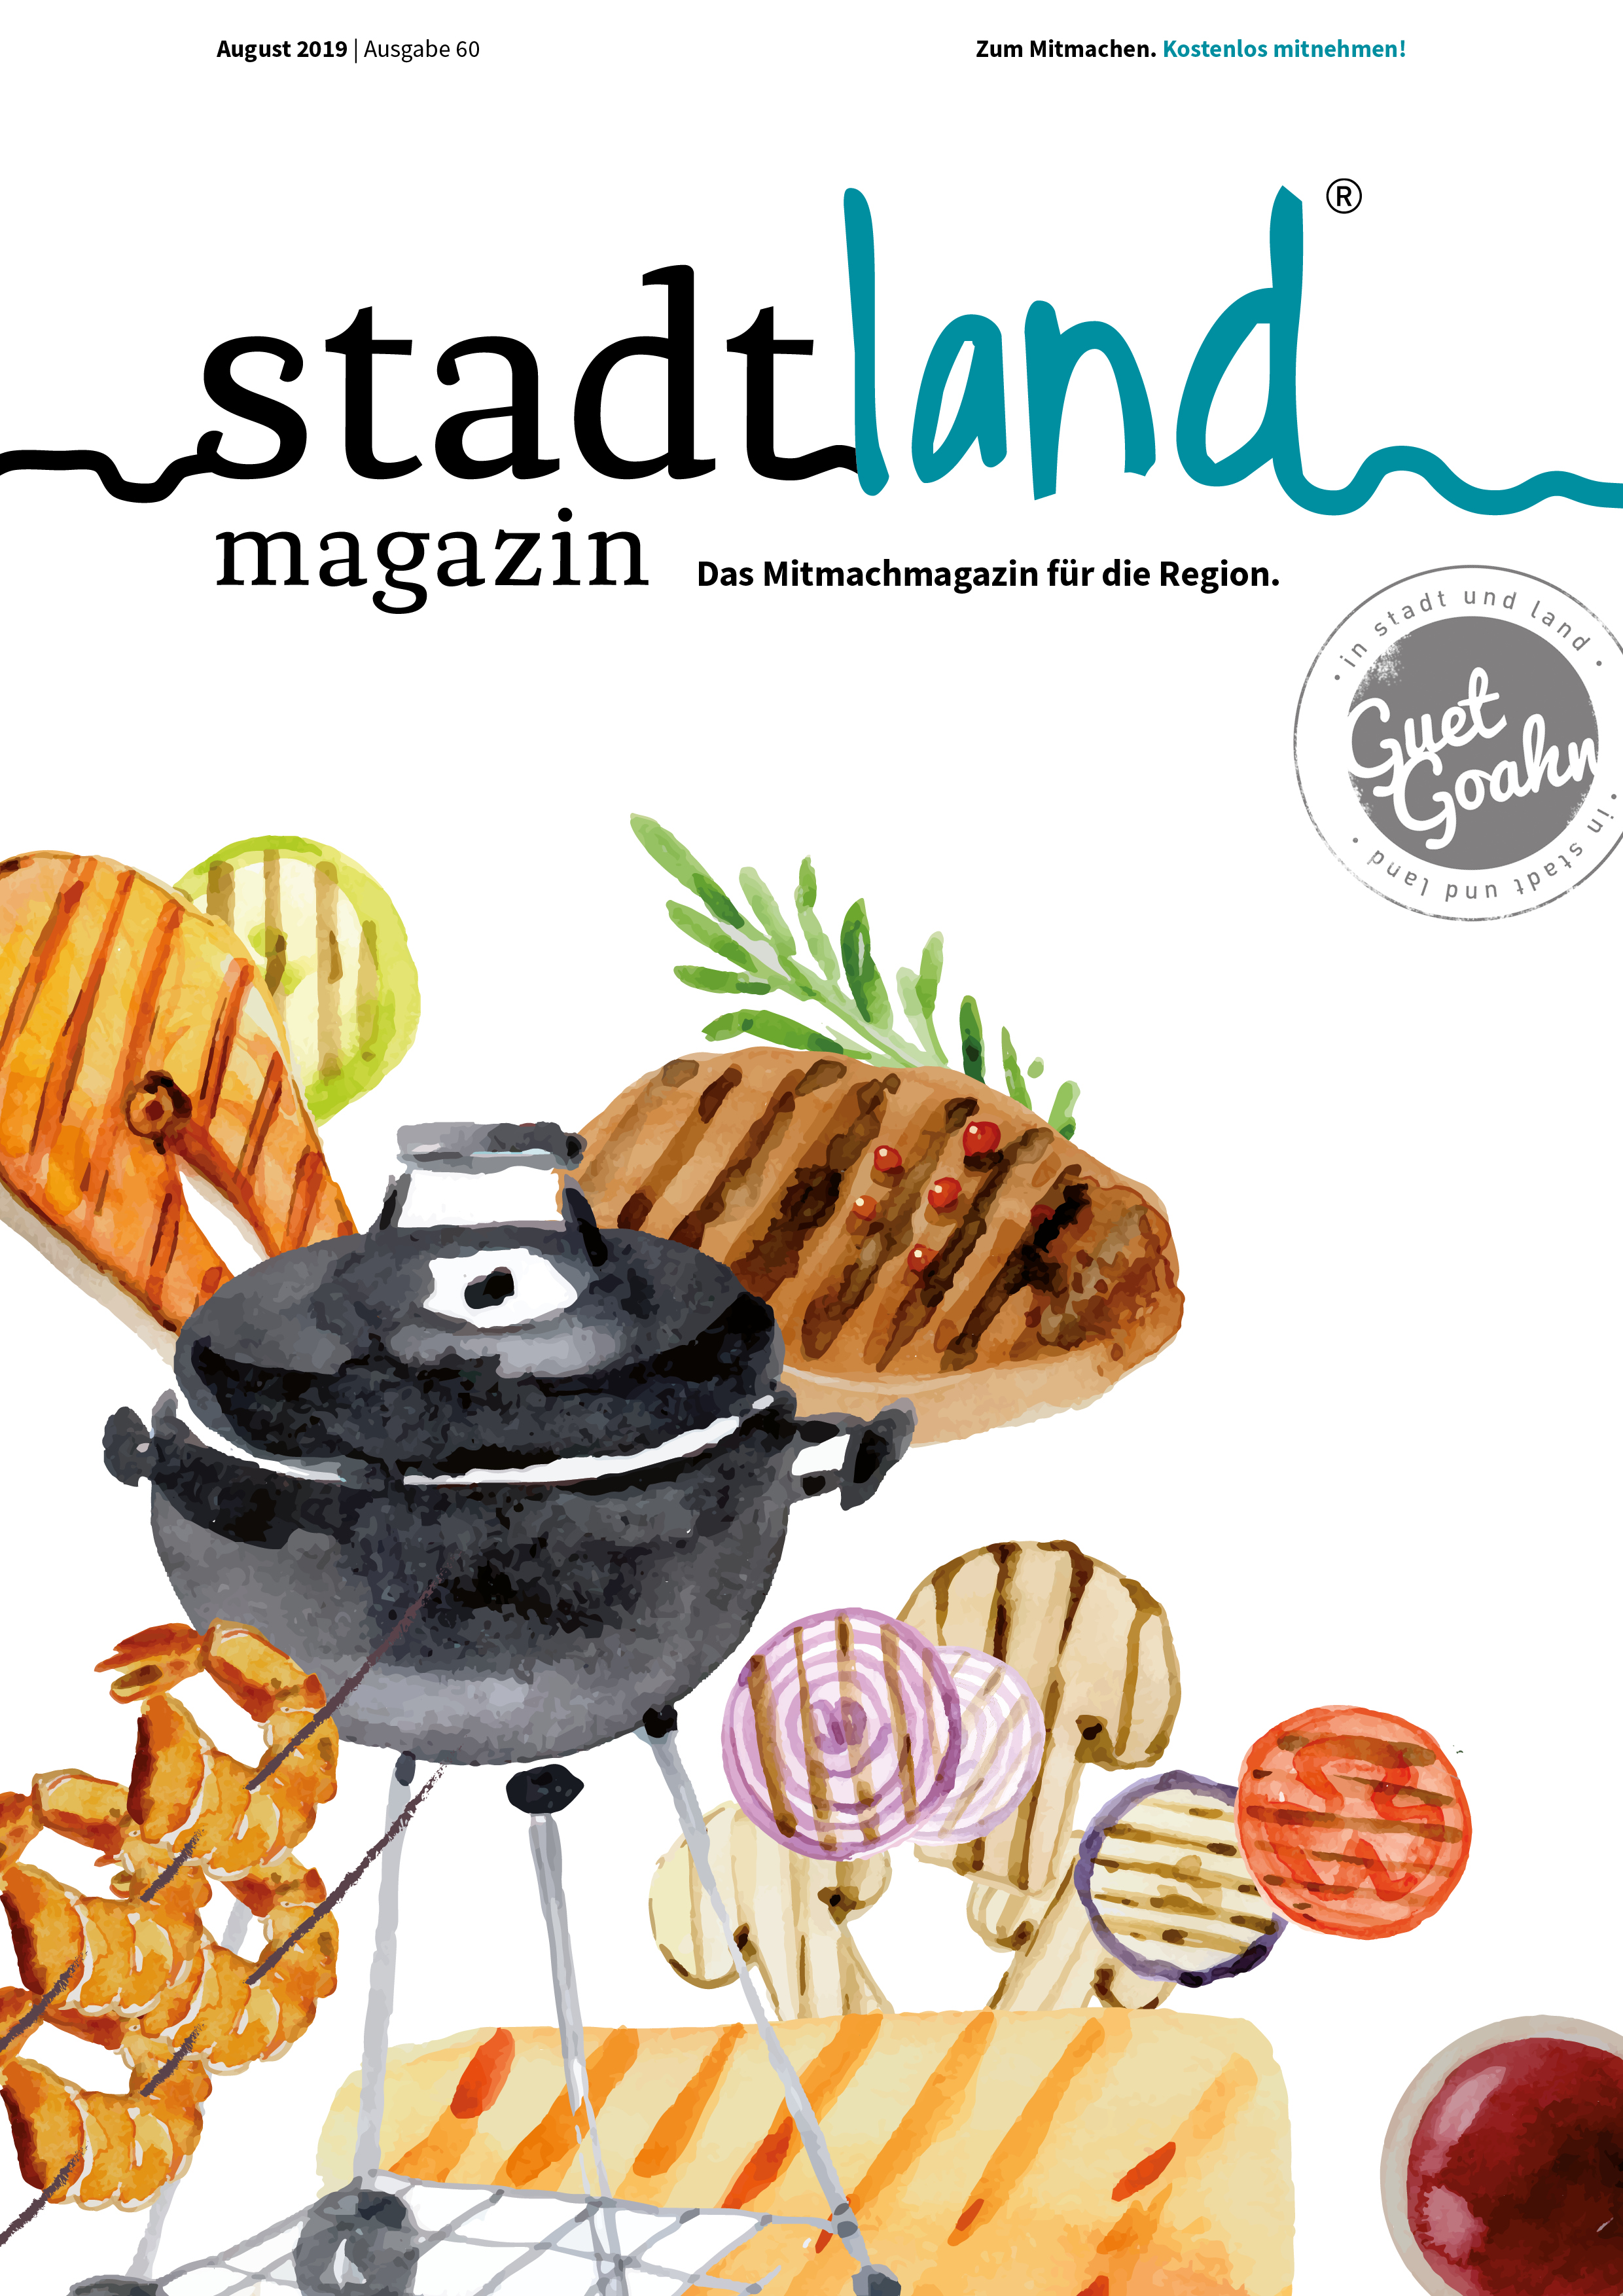 stadtland magazin August 2019